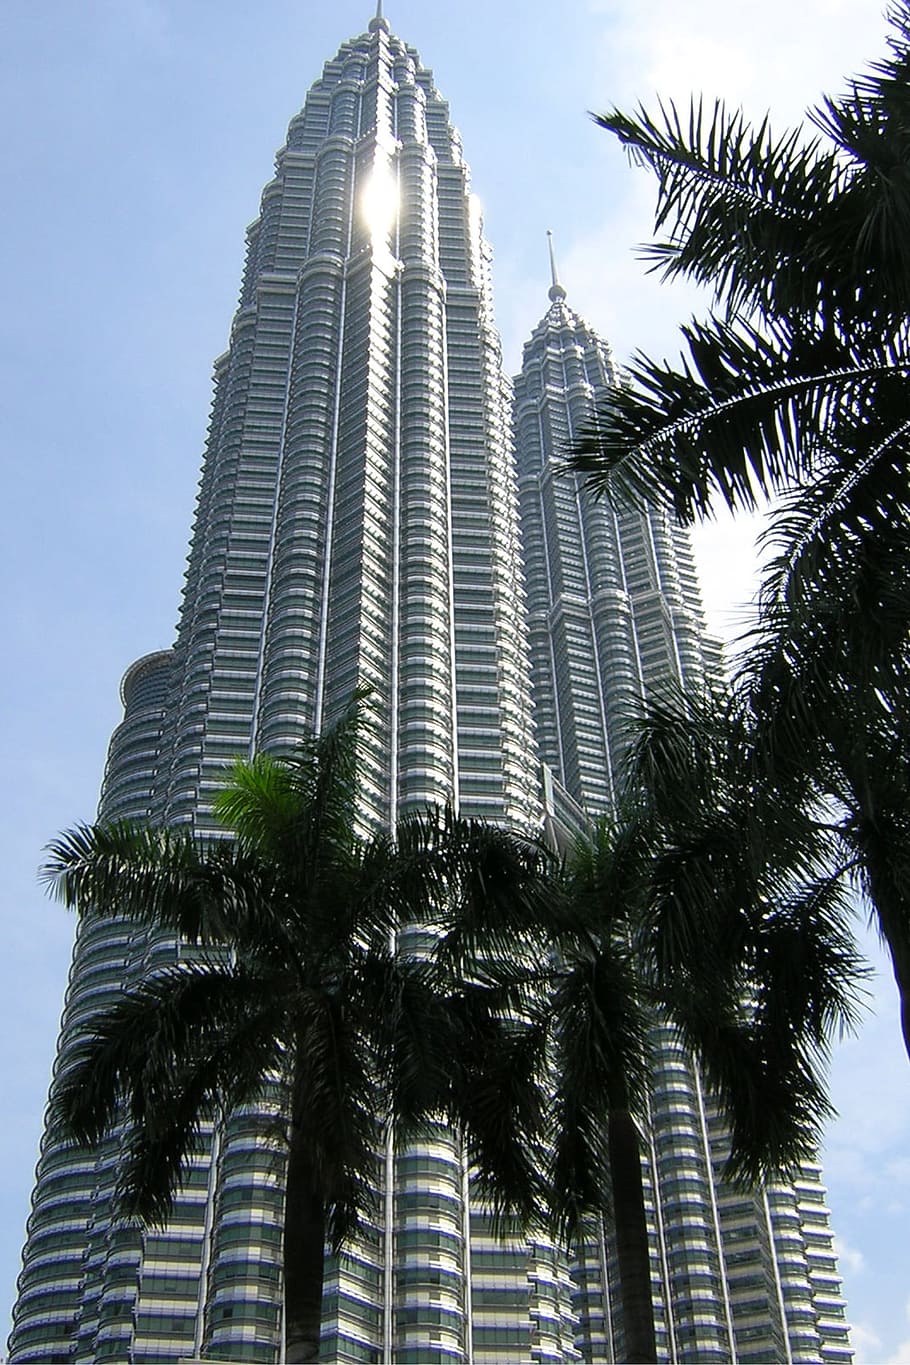 menara petronas, menara kembar petronas, menara berkembar petronas, malaysia, gedung pencakar langit, bangunan, asia, kuala lumpur, kota, menara kembar